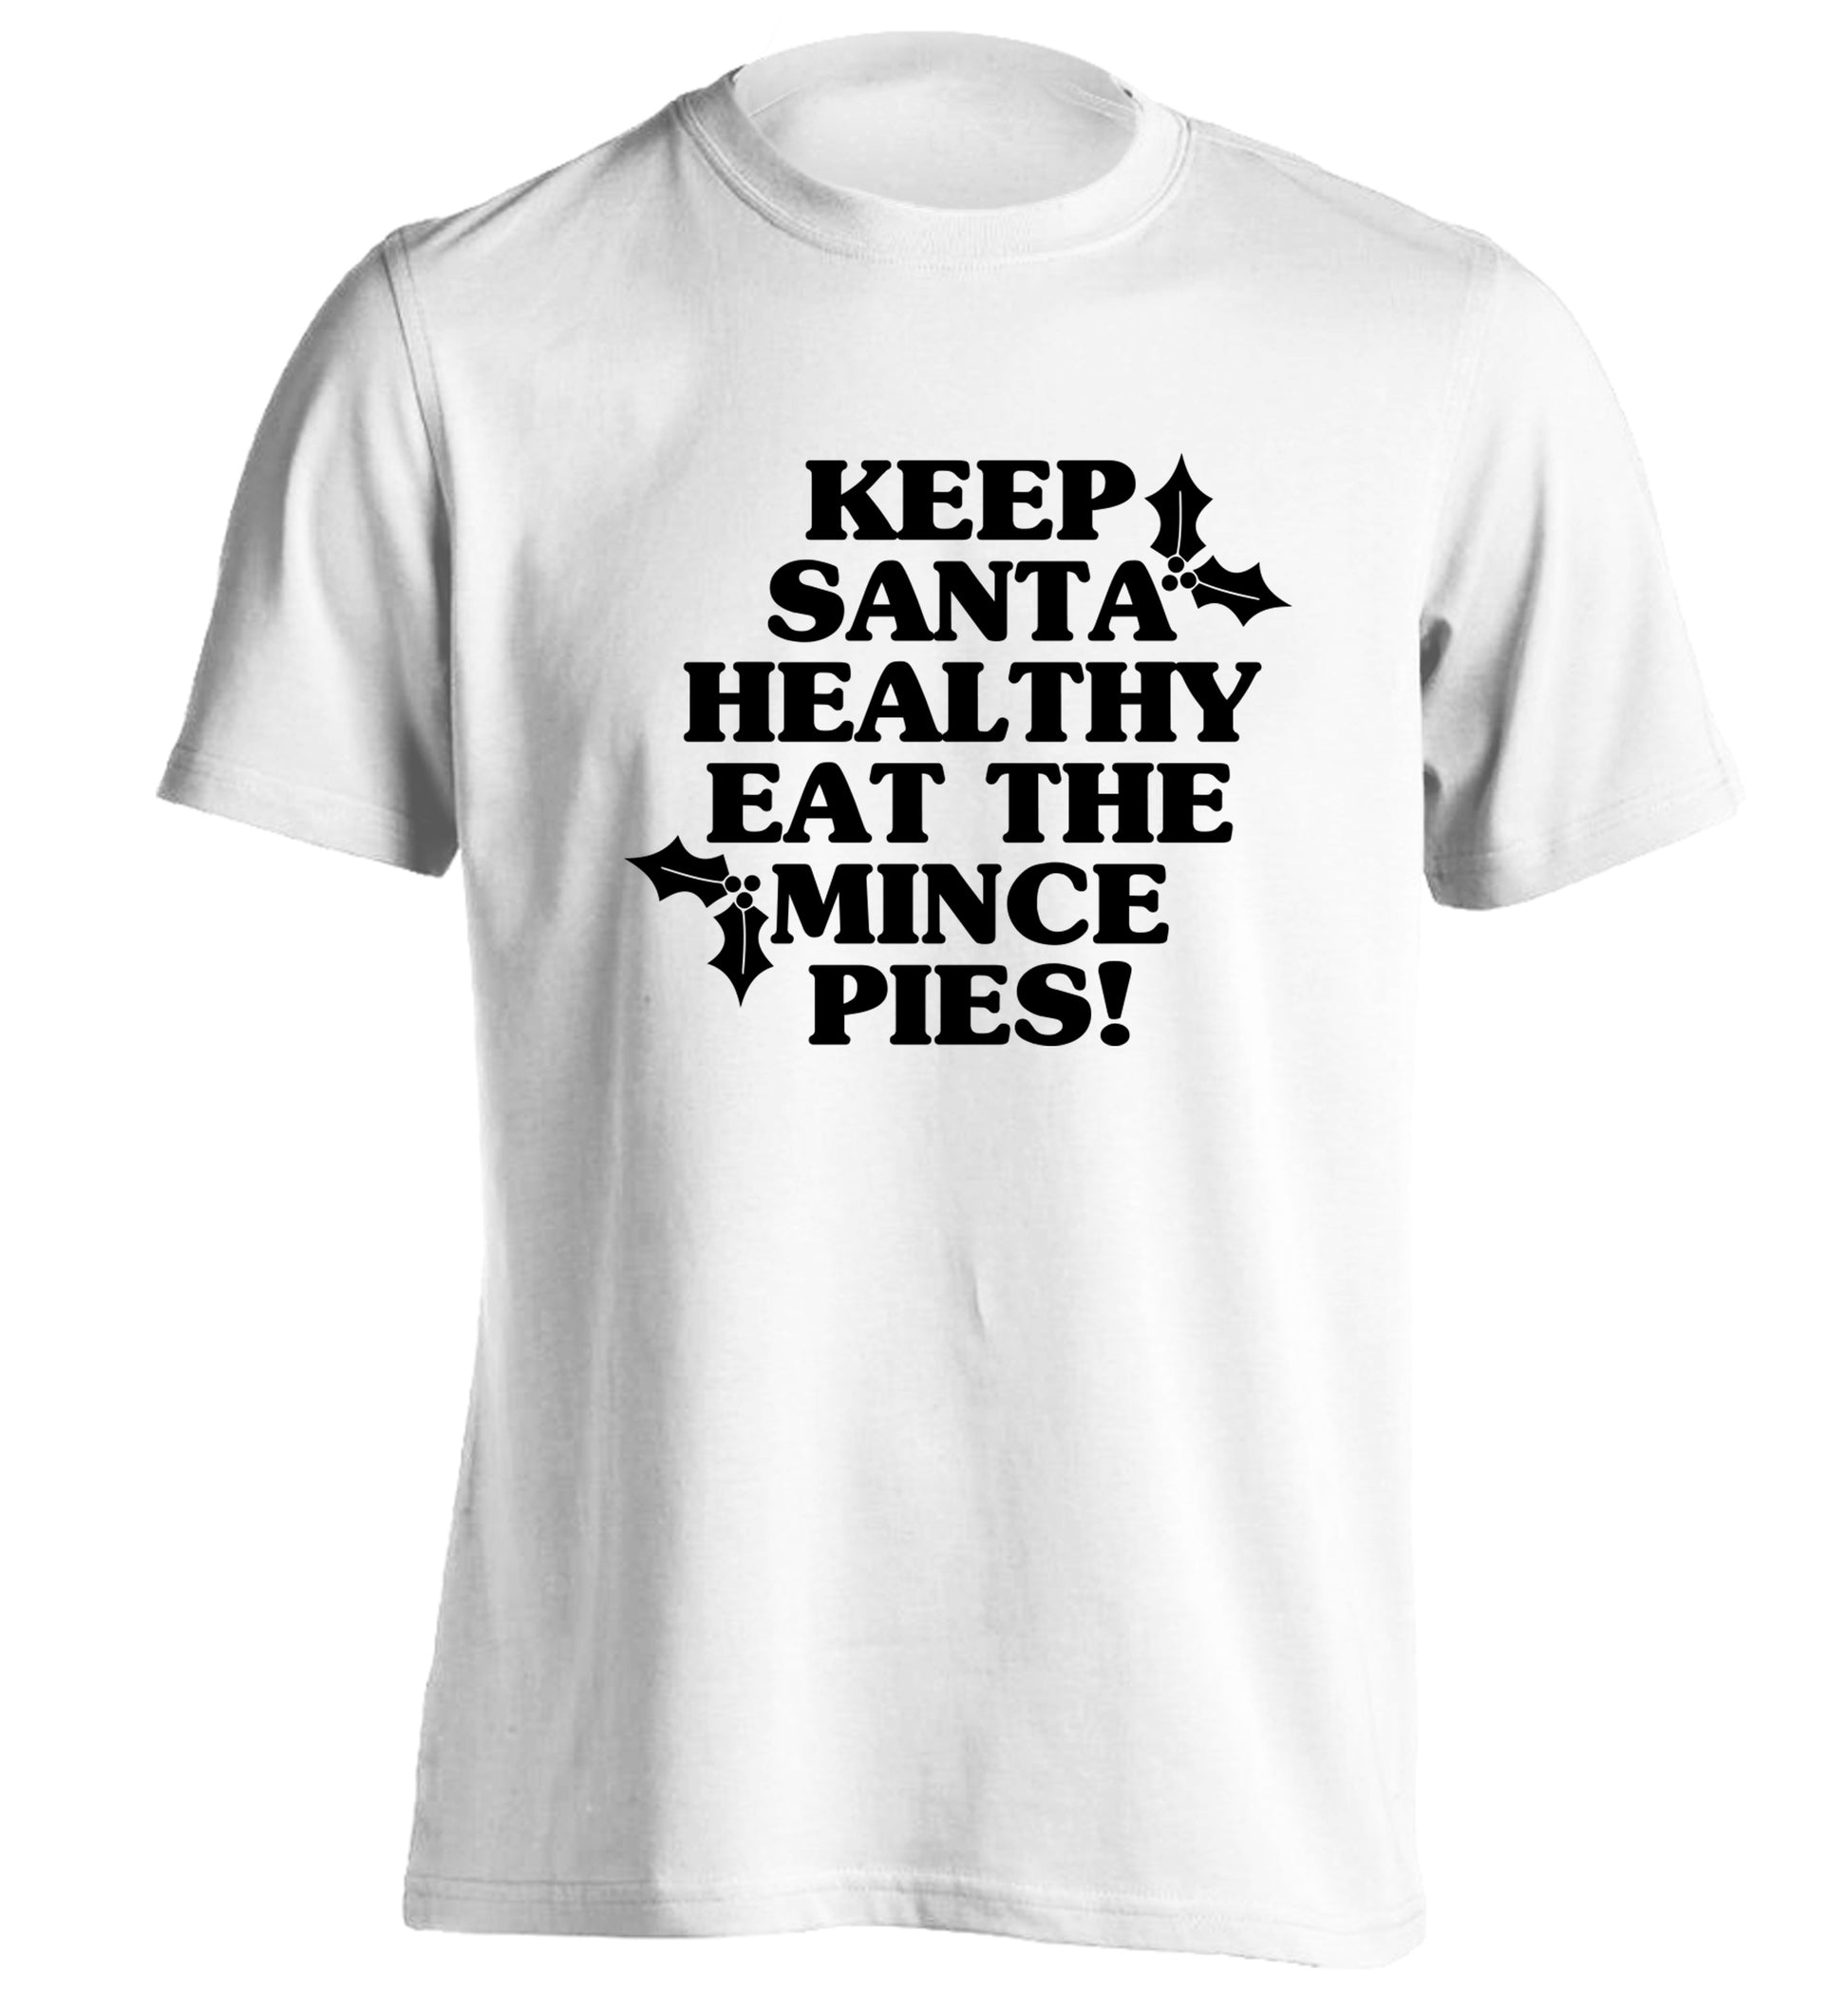 Keep santa healthy eat the mince pies adults unisex white Tshirt 2XL